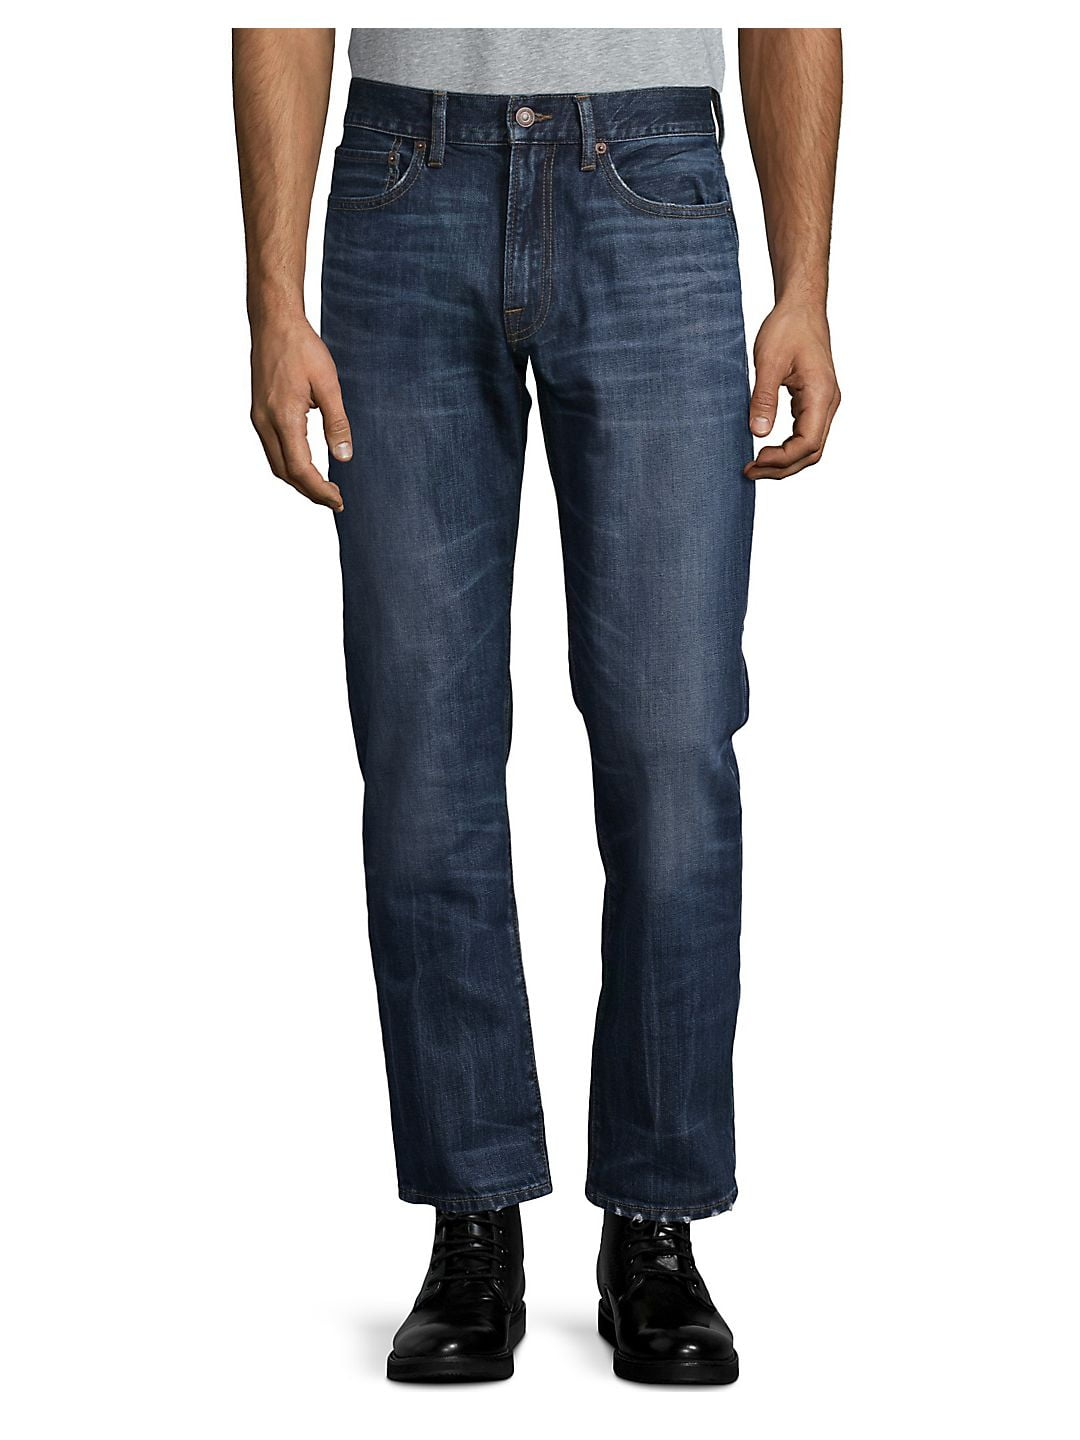 Lucky Brand - 121 Slim Henderson Jeans - Walmart.com - Walmart.com